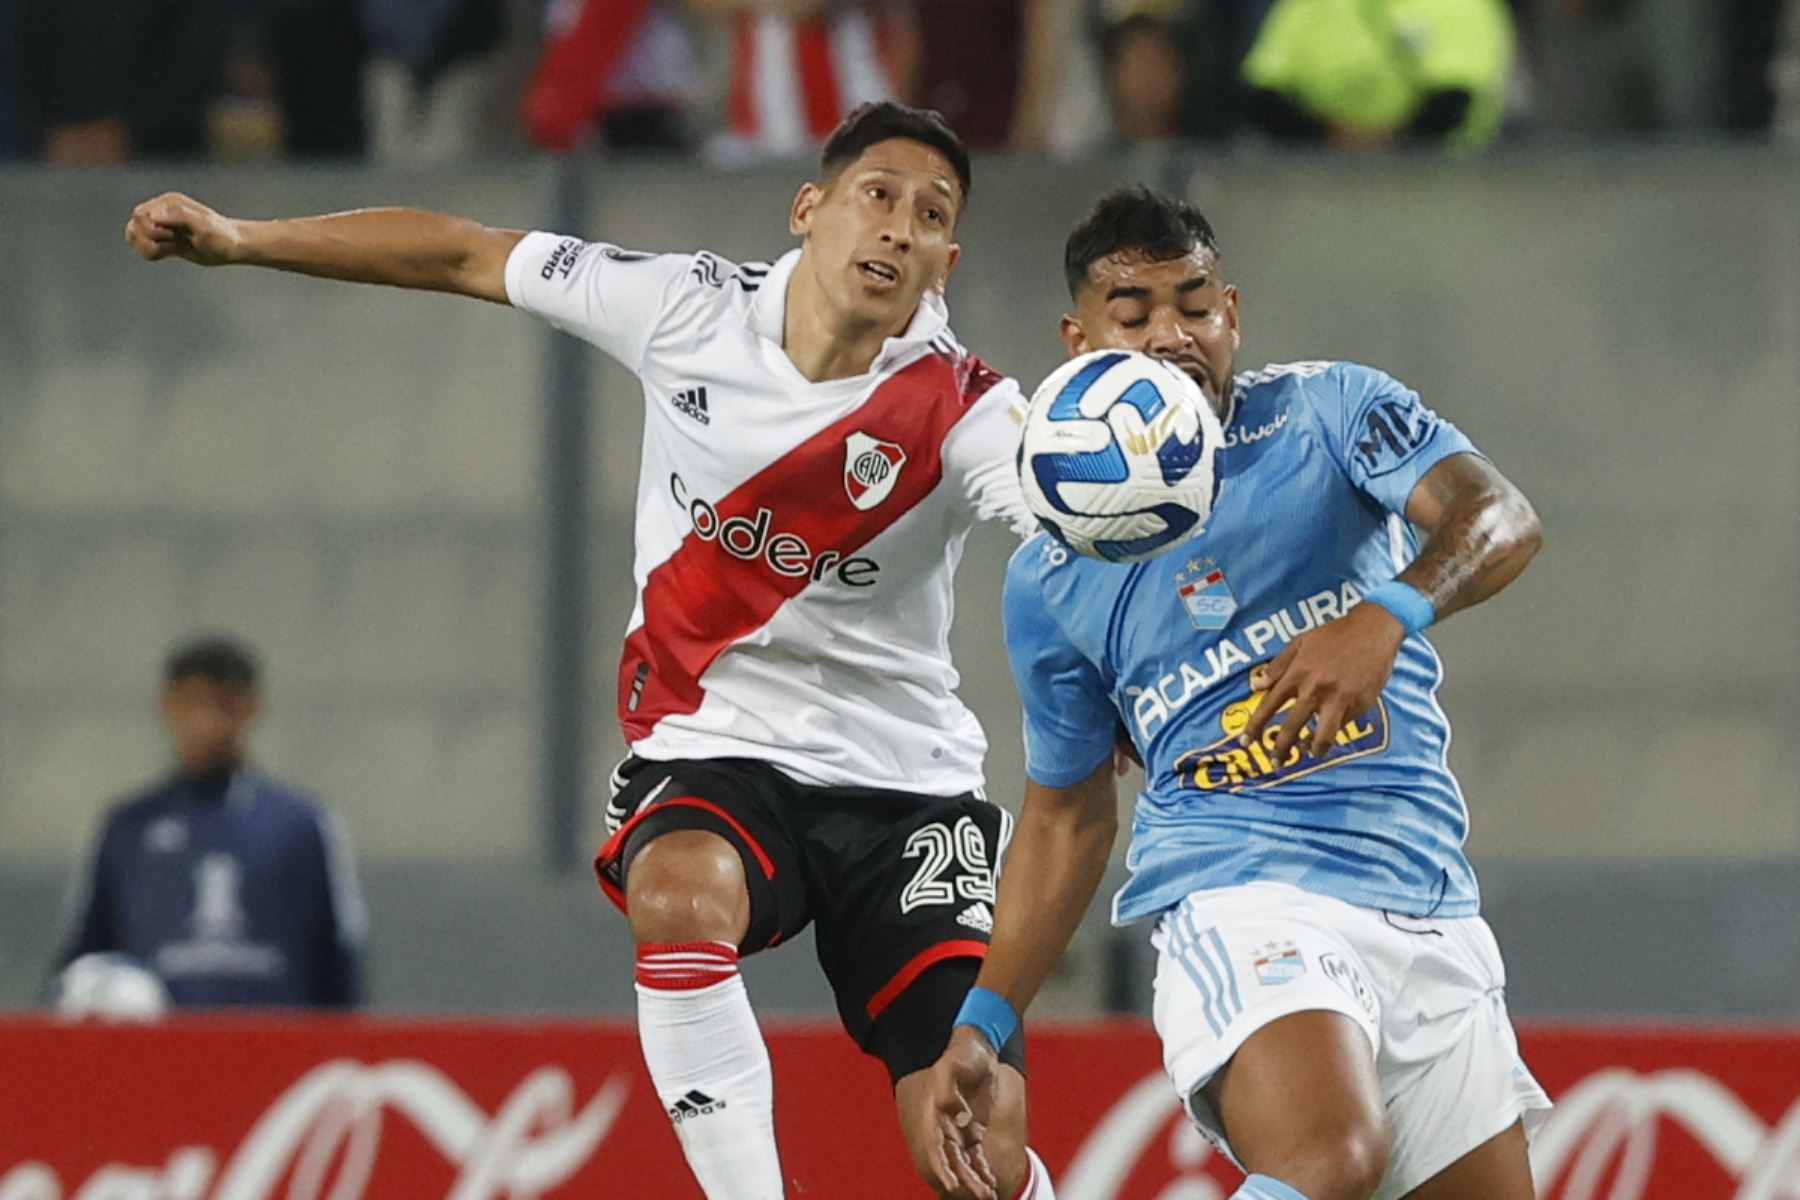 Sporting Cristal de Perú y River Plate de Argentina se enfrentan en el Estadio Nacional de Lima por la Copa Libertadores.

Foto: ANDINA/Vidal Tarqui